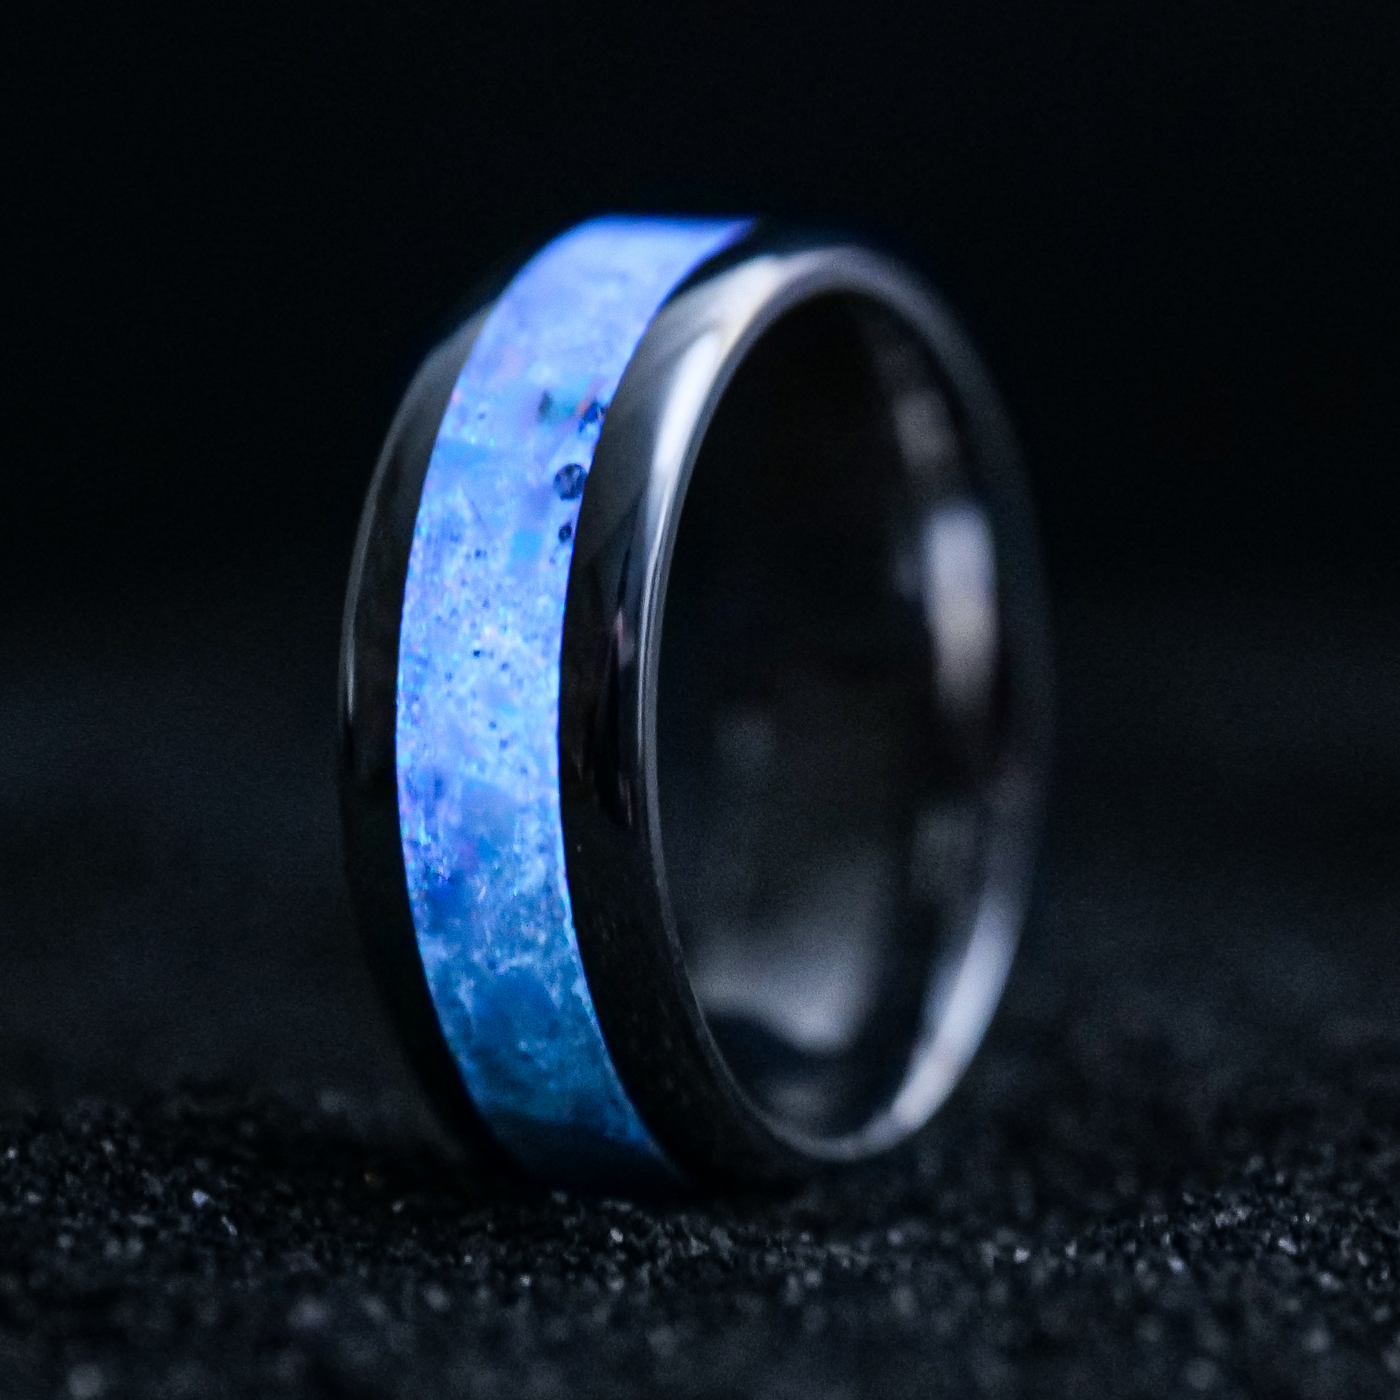 Radiant Pearl Opal Glowstone Ring - Patrick Adair Designs